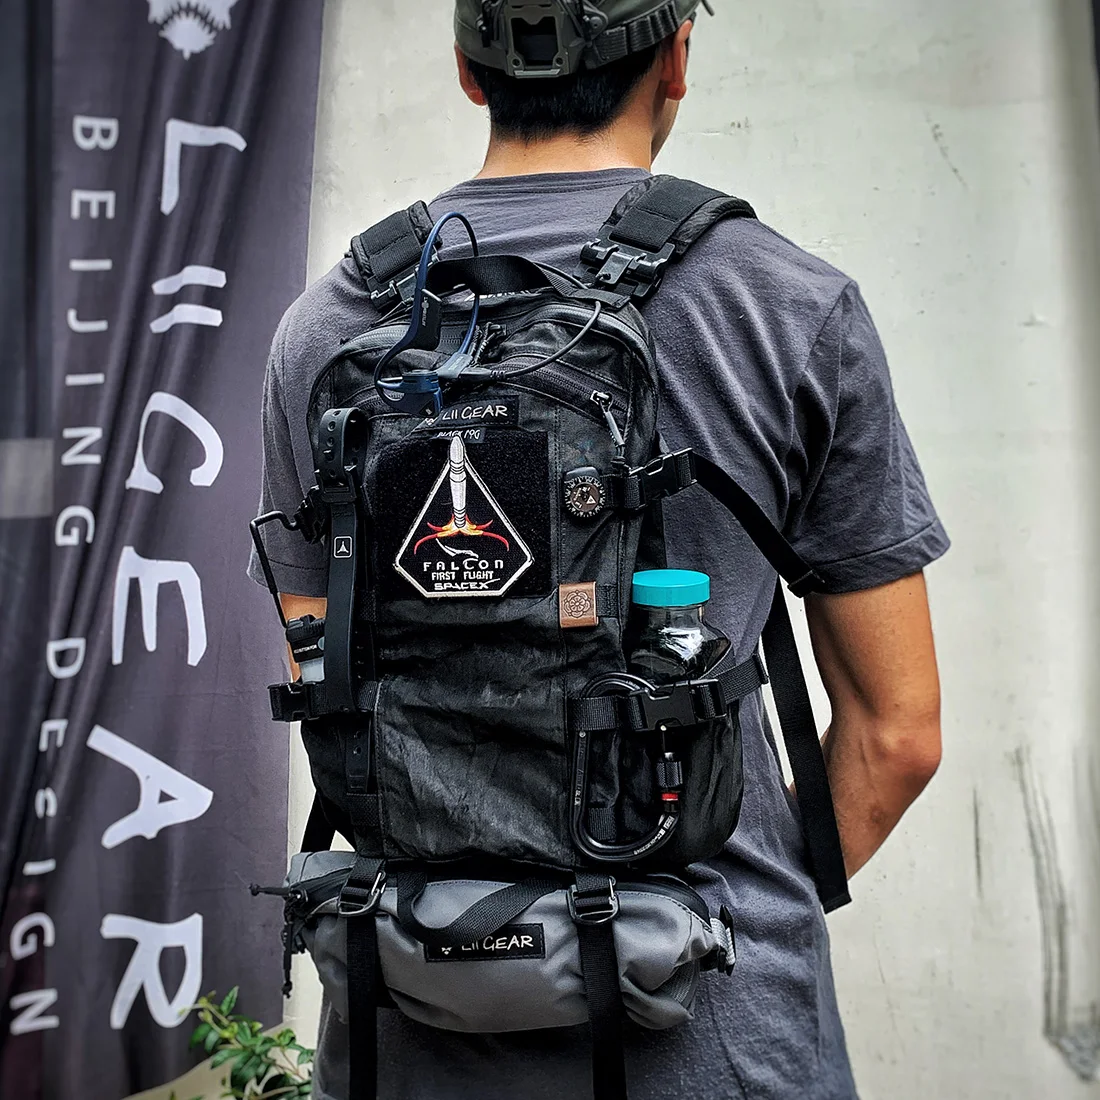 Lii Gear Mr Big 13L Quick Release Tactical Hunting Backpack Outdoor Traveling Hiking Shoulder Bag